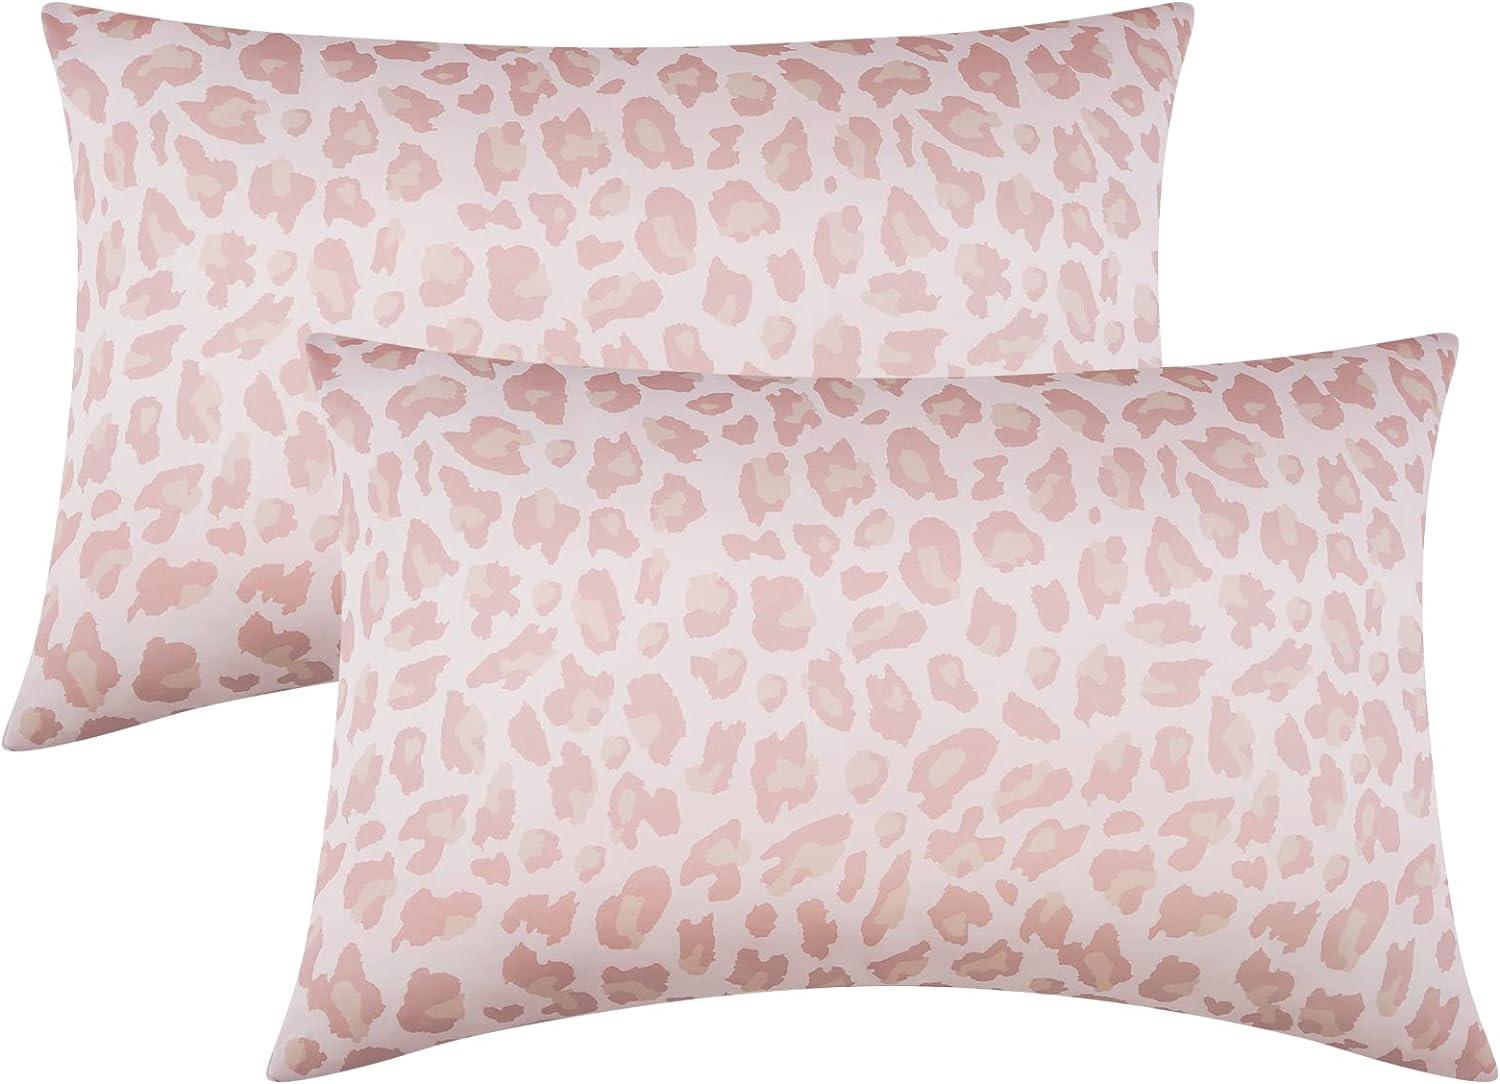 Dekoresyon Satin Pillowcases 2-Pack for $3.99